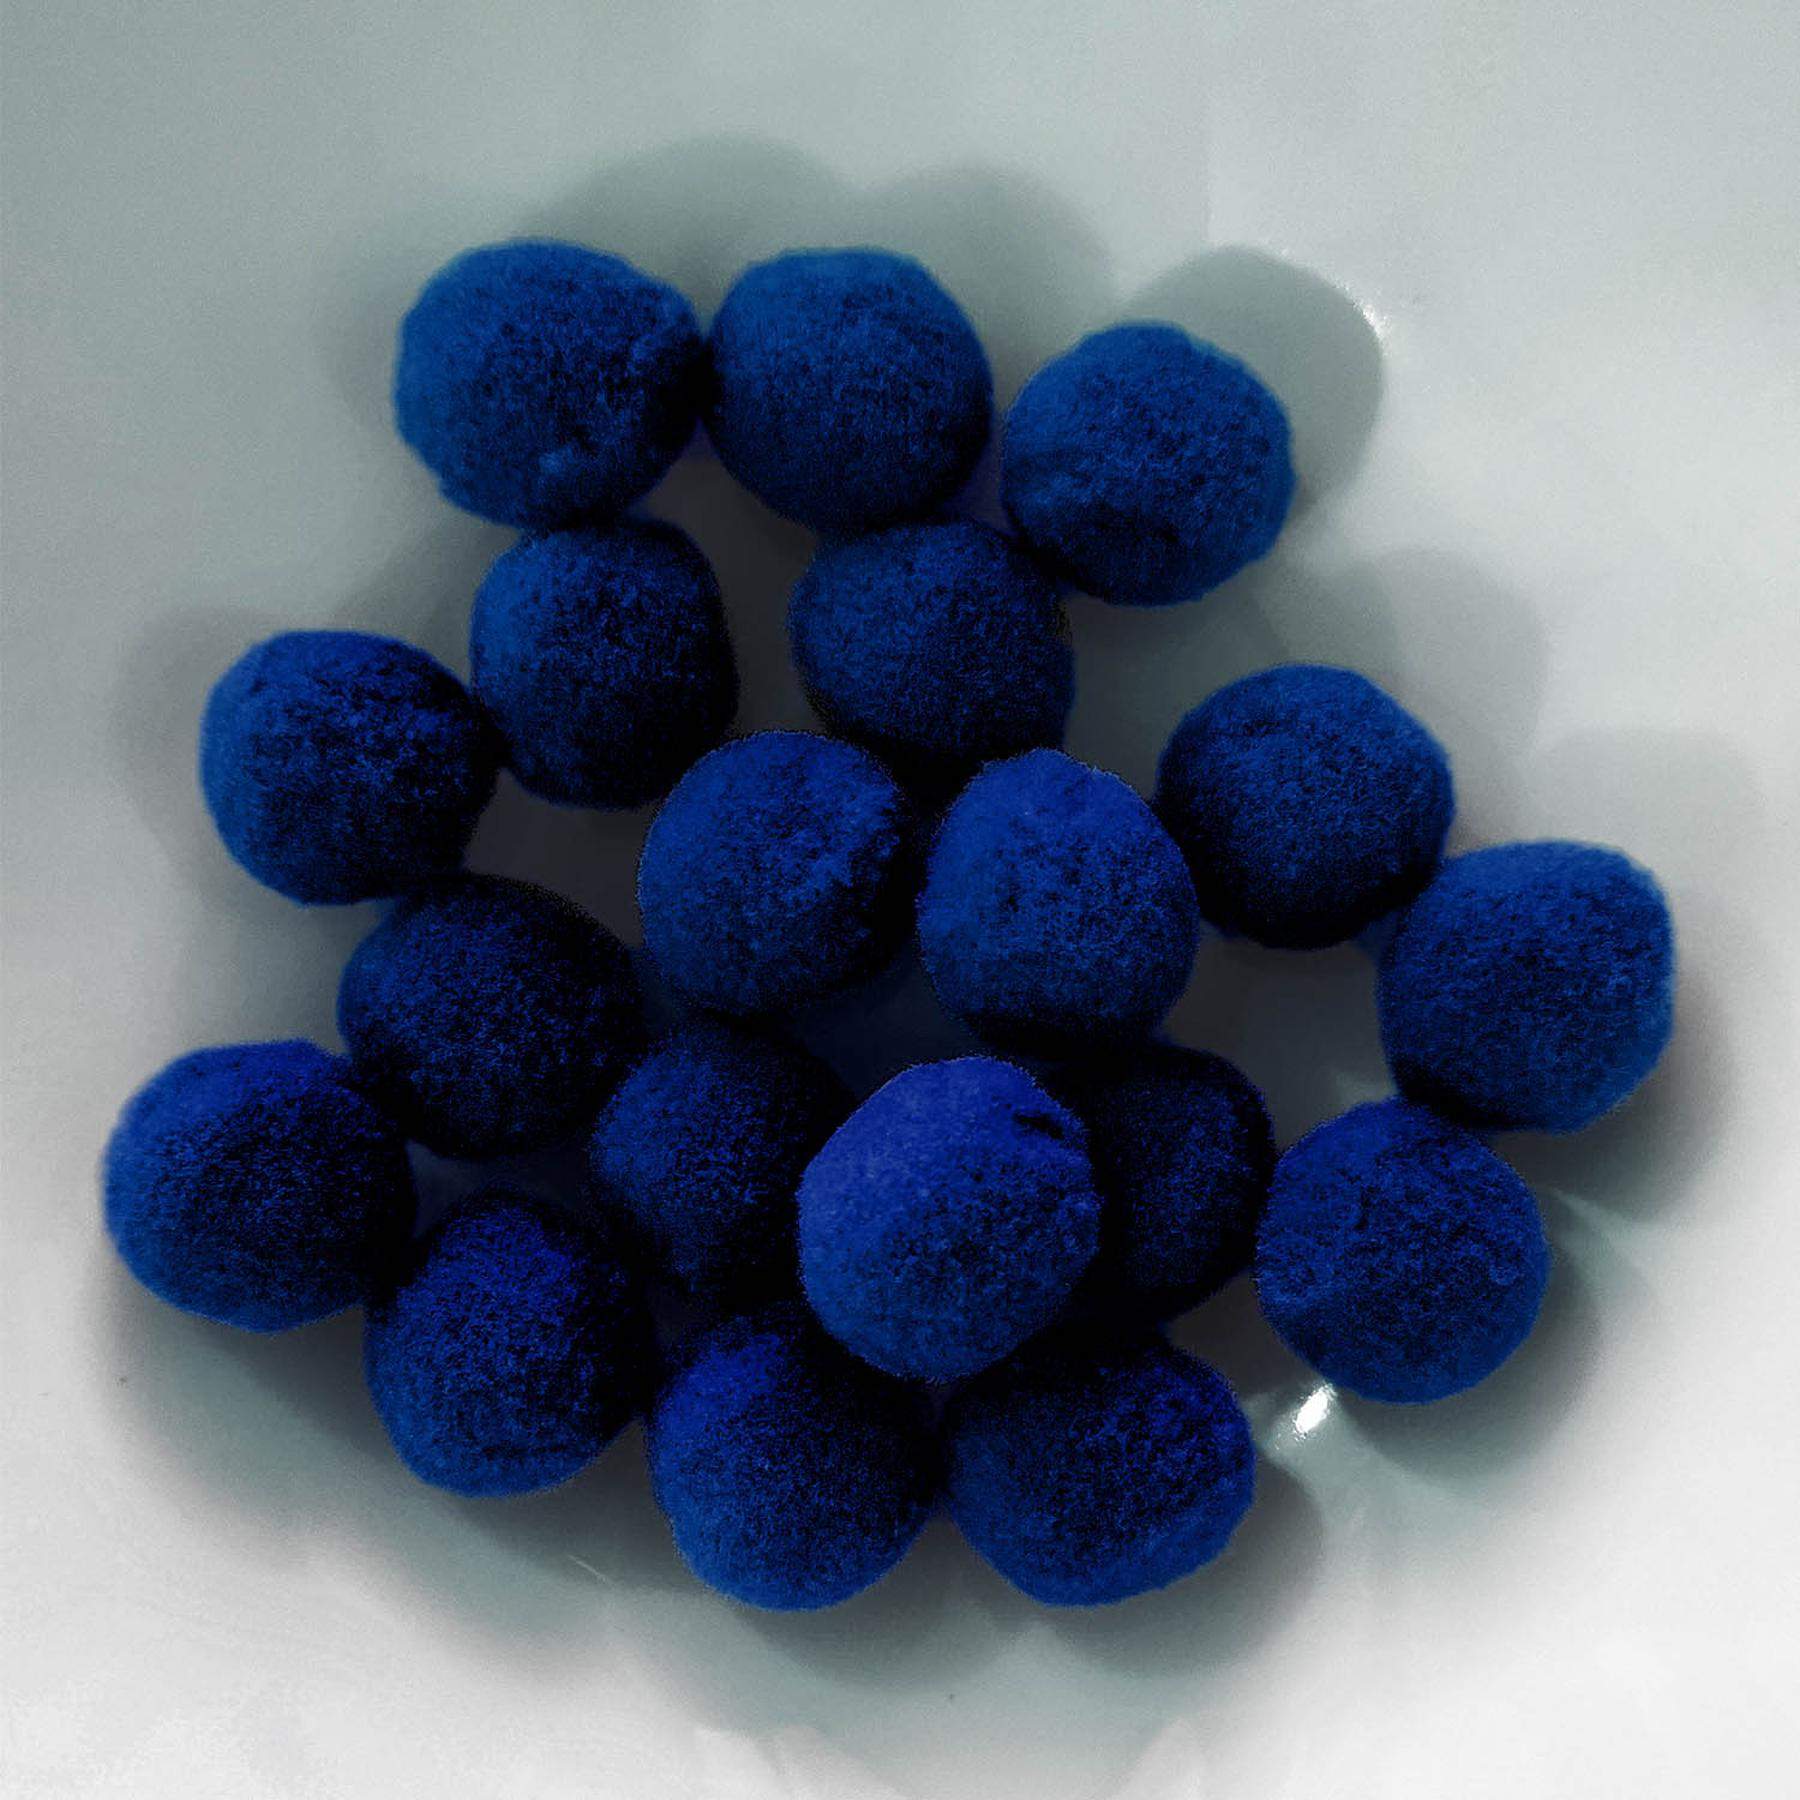 PomPon / Bälle aus Baumwolle - 25 mm / 20er Set - Blau dunkel / Königsblau